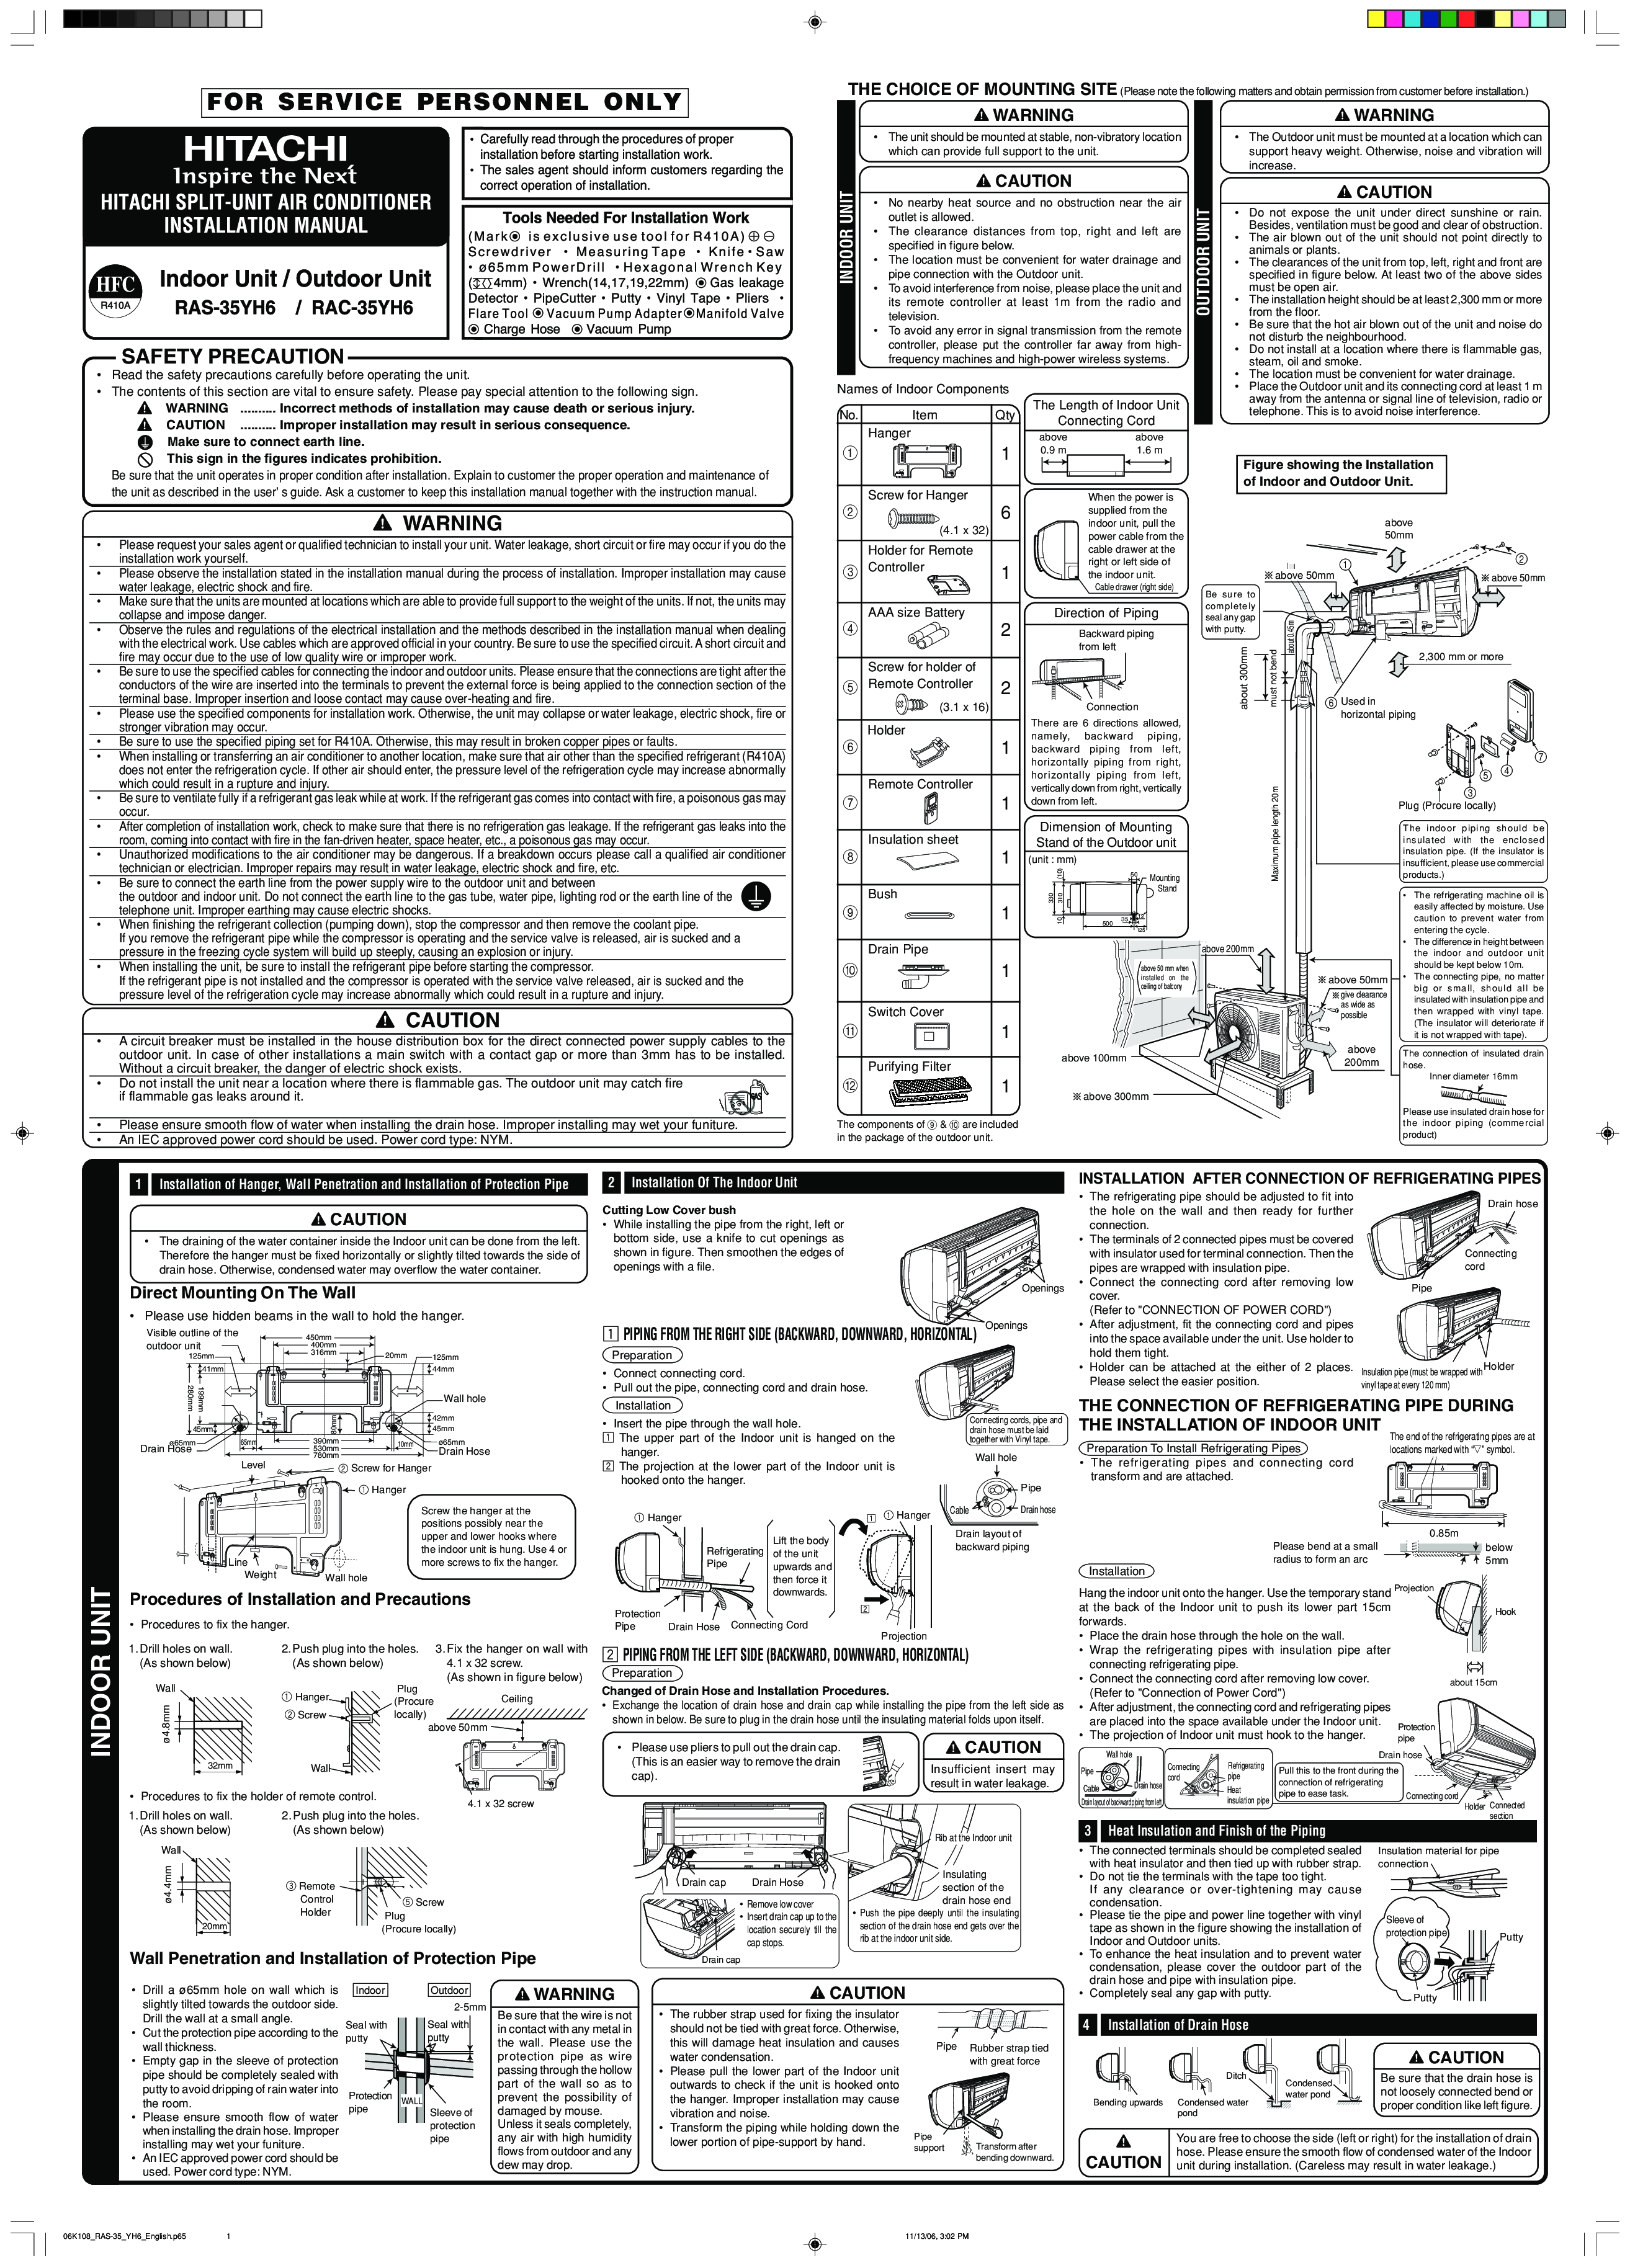 Hitachi RAS-35YH6, RAC-35YH6 User Manual